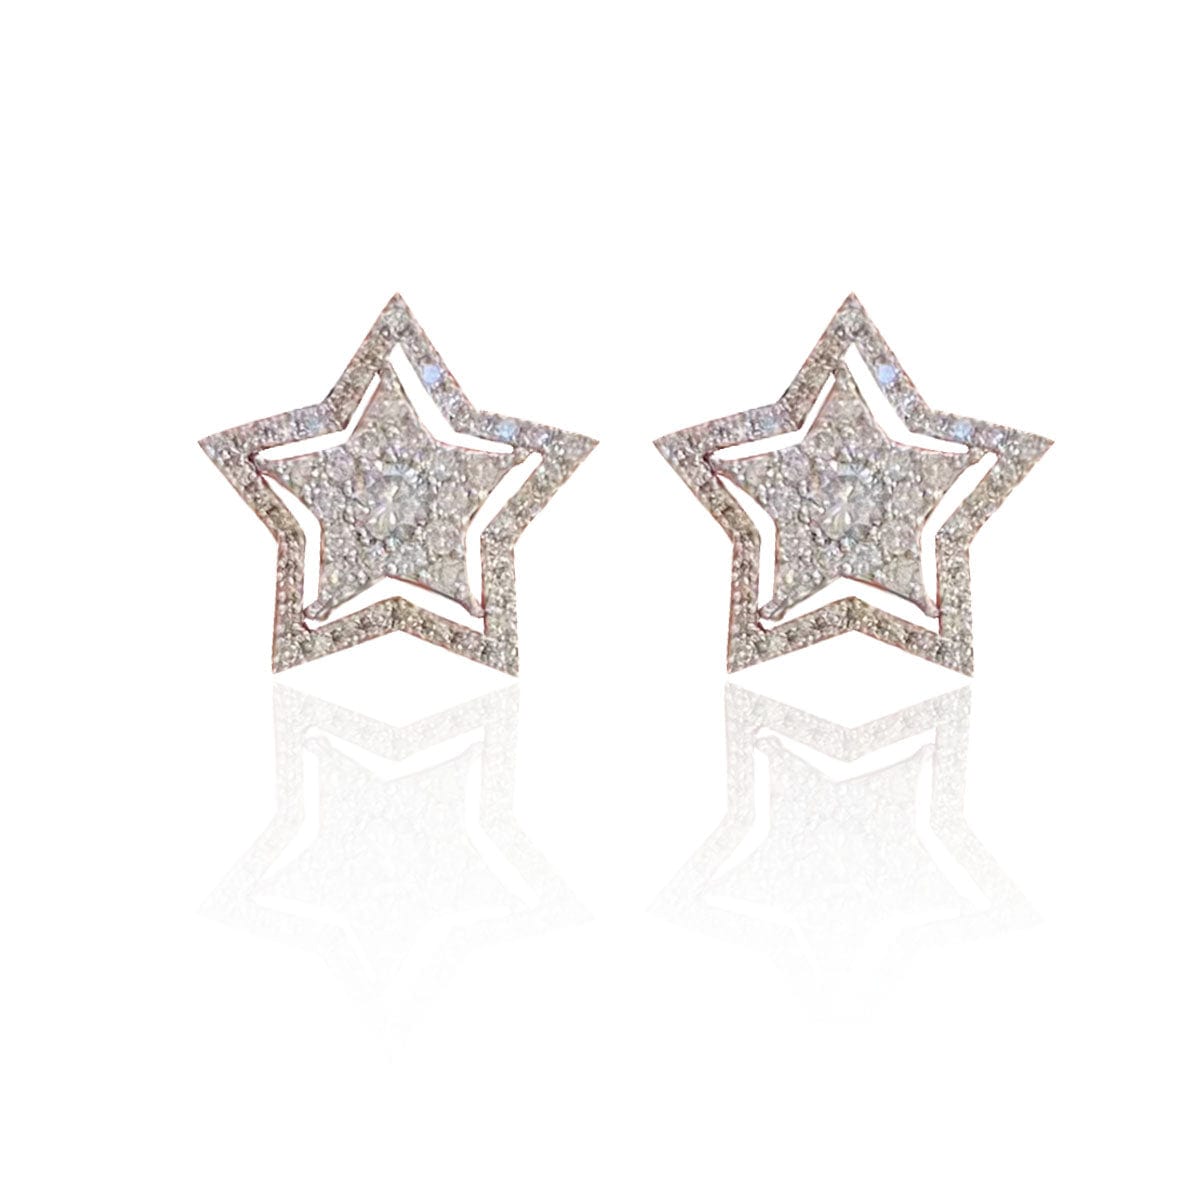 A Star Diamond Stud Earrings